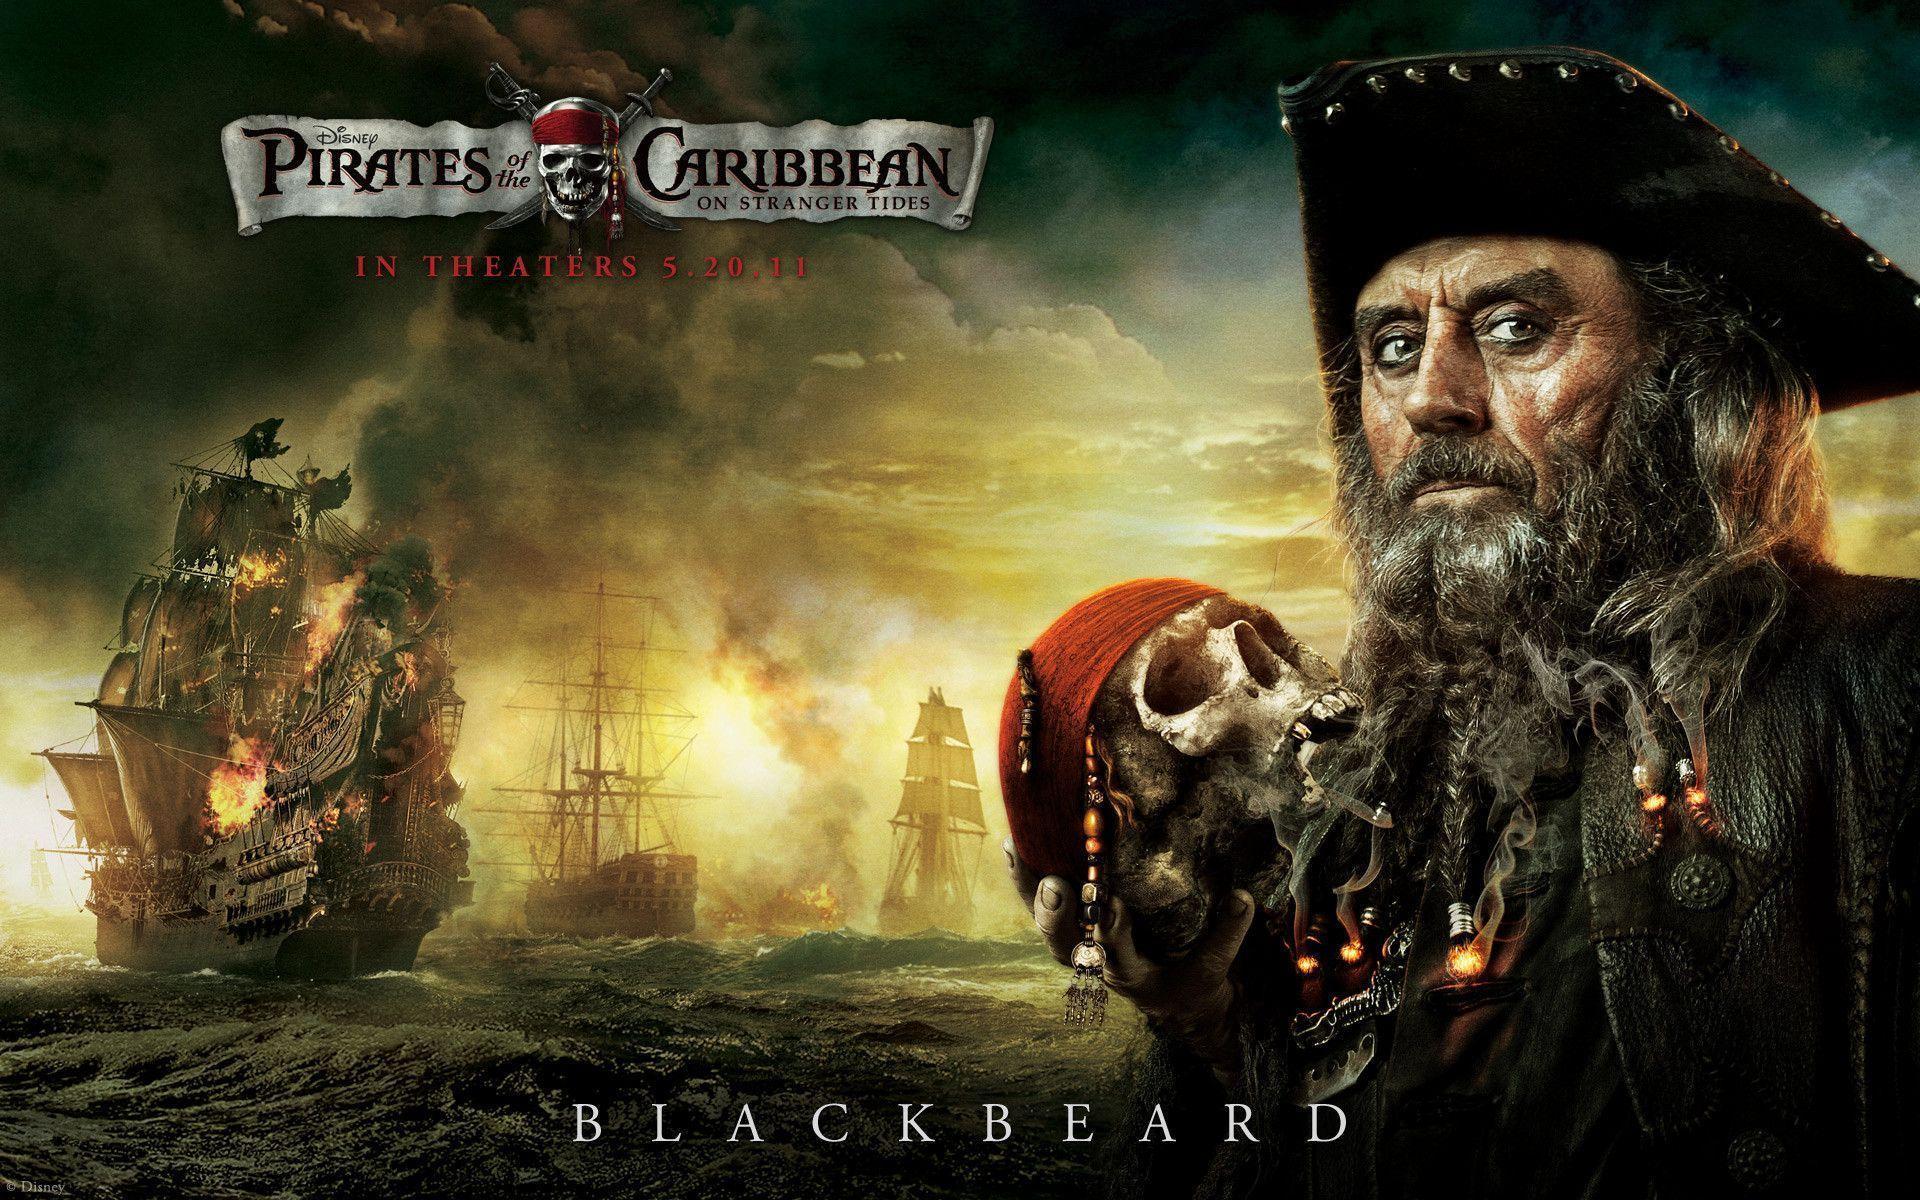 blackbeards ship in pirates of the caribbean 4 hdtv wallpaper